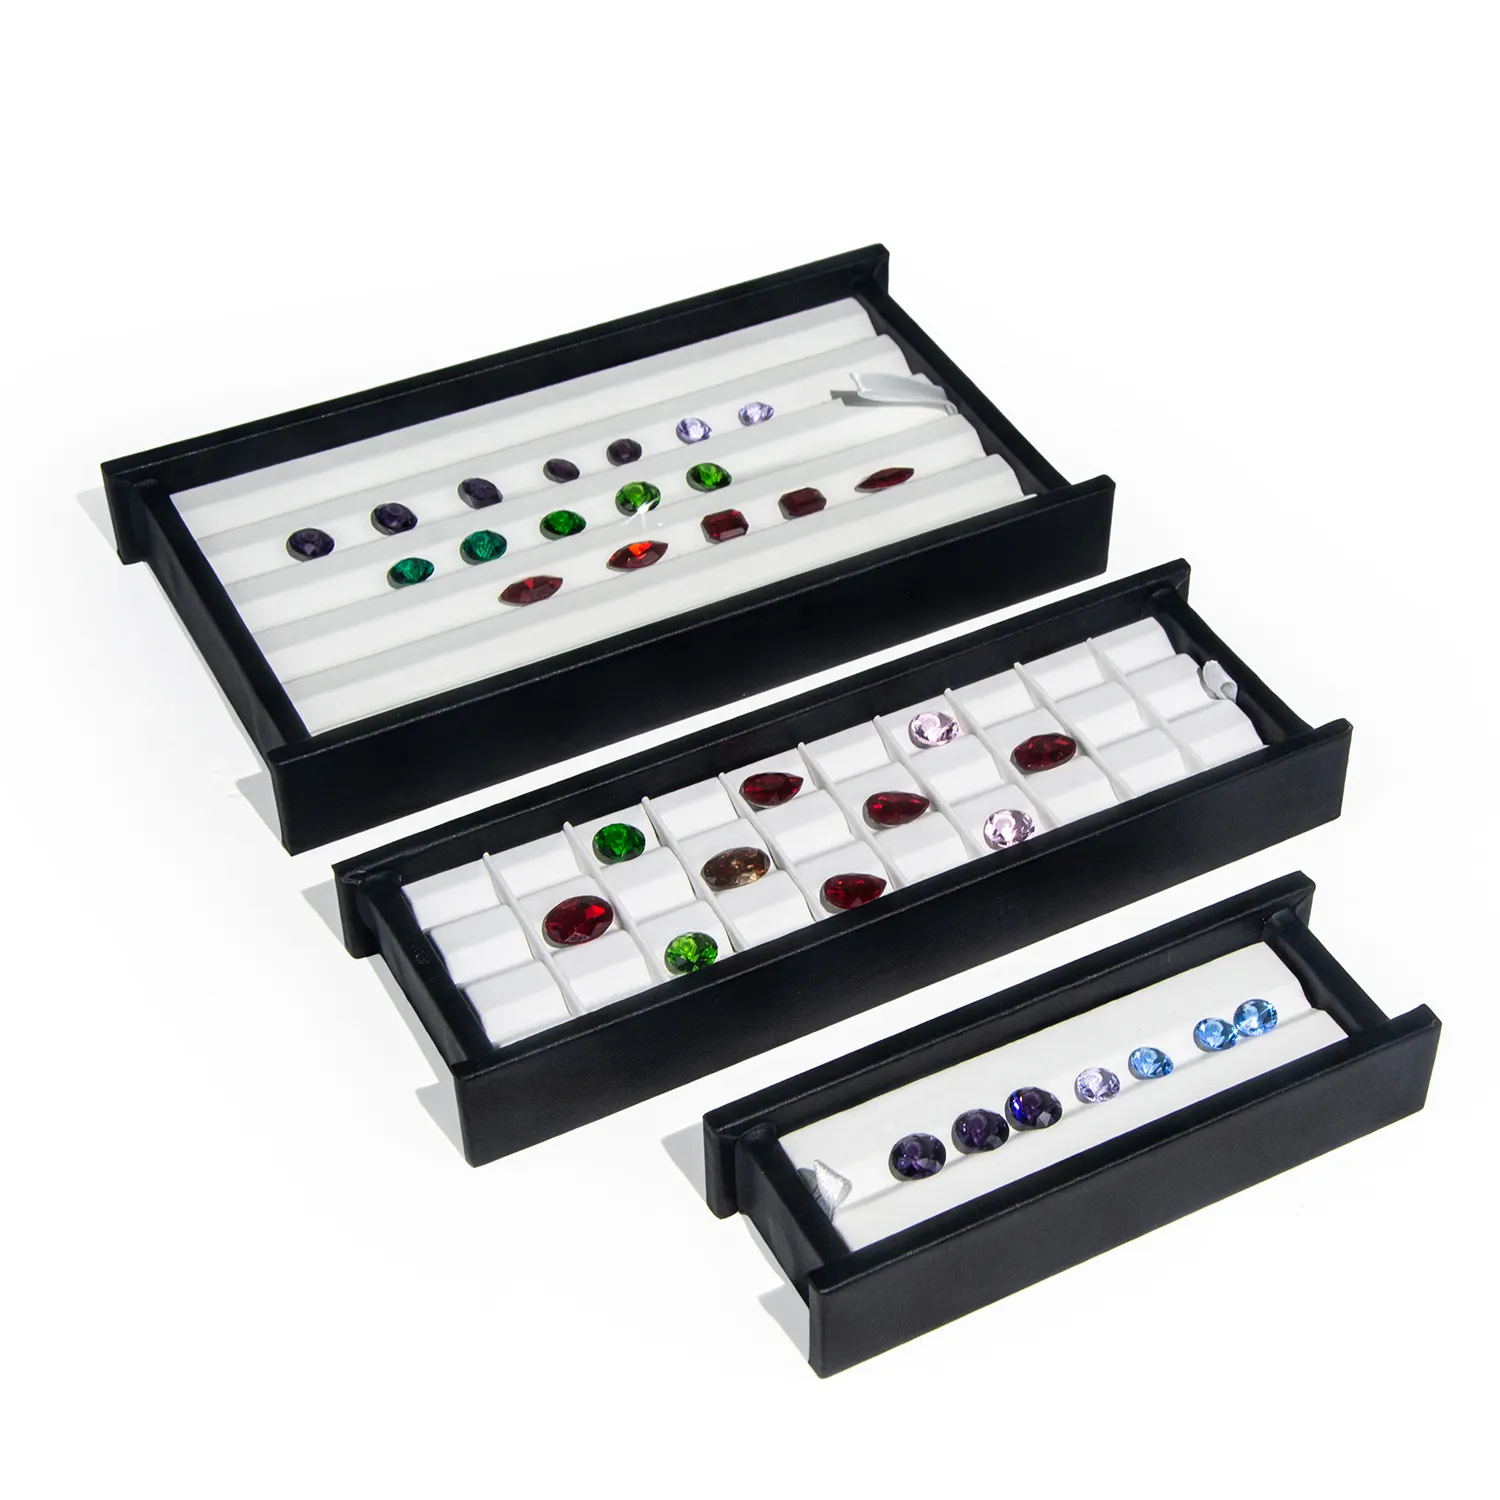 Set Kotak Batu Permata FORTE Kemasan Besar Berlian Permata Kemasan Kotak Penyimpanan Perhiasan Tampilan Baki Perhiasan Kulit Indah